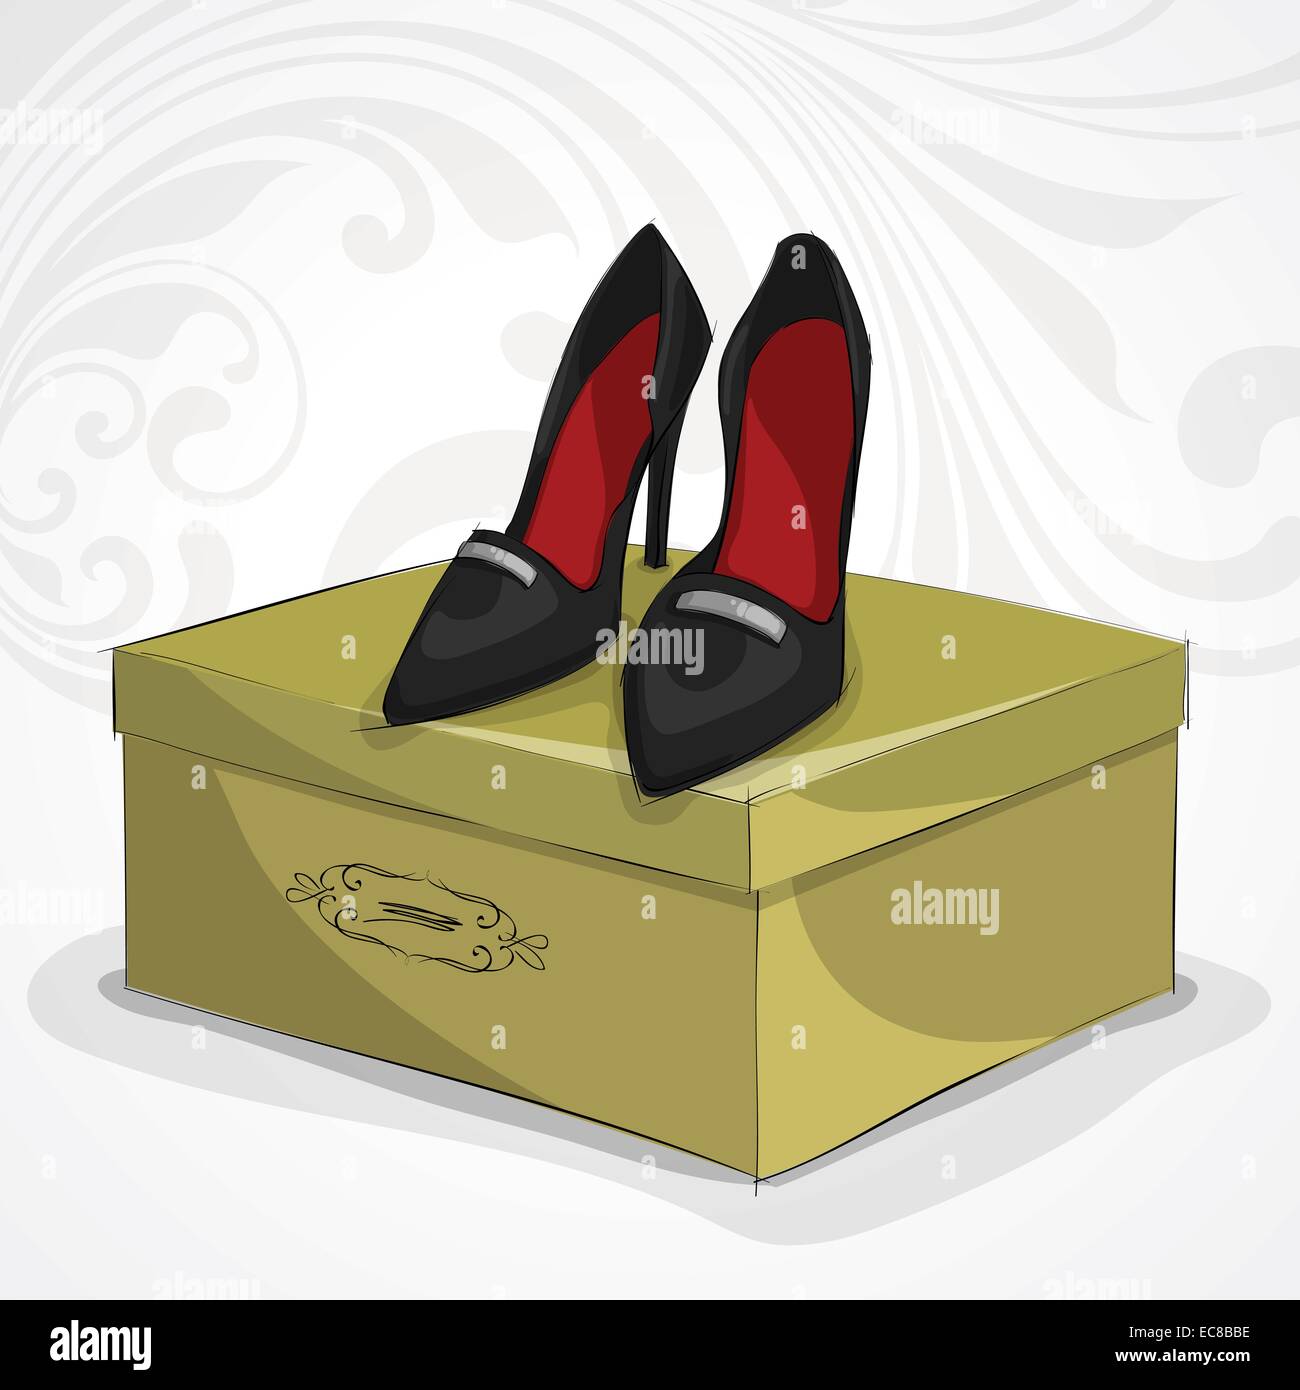 vector beautiful pair of shoes with high heel  Diseños de zapatos, Tipos  de zapatos, Zapatos dibujos